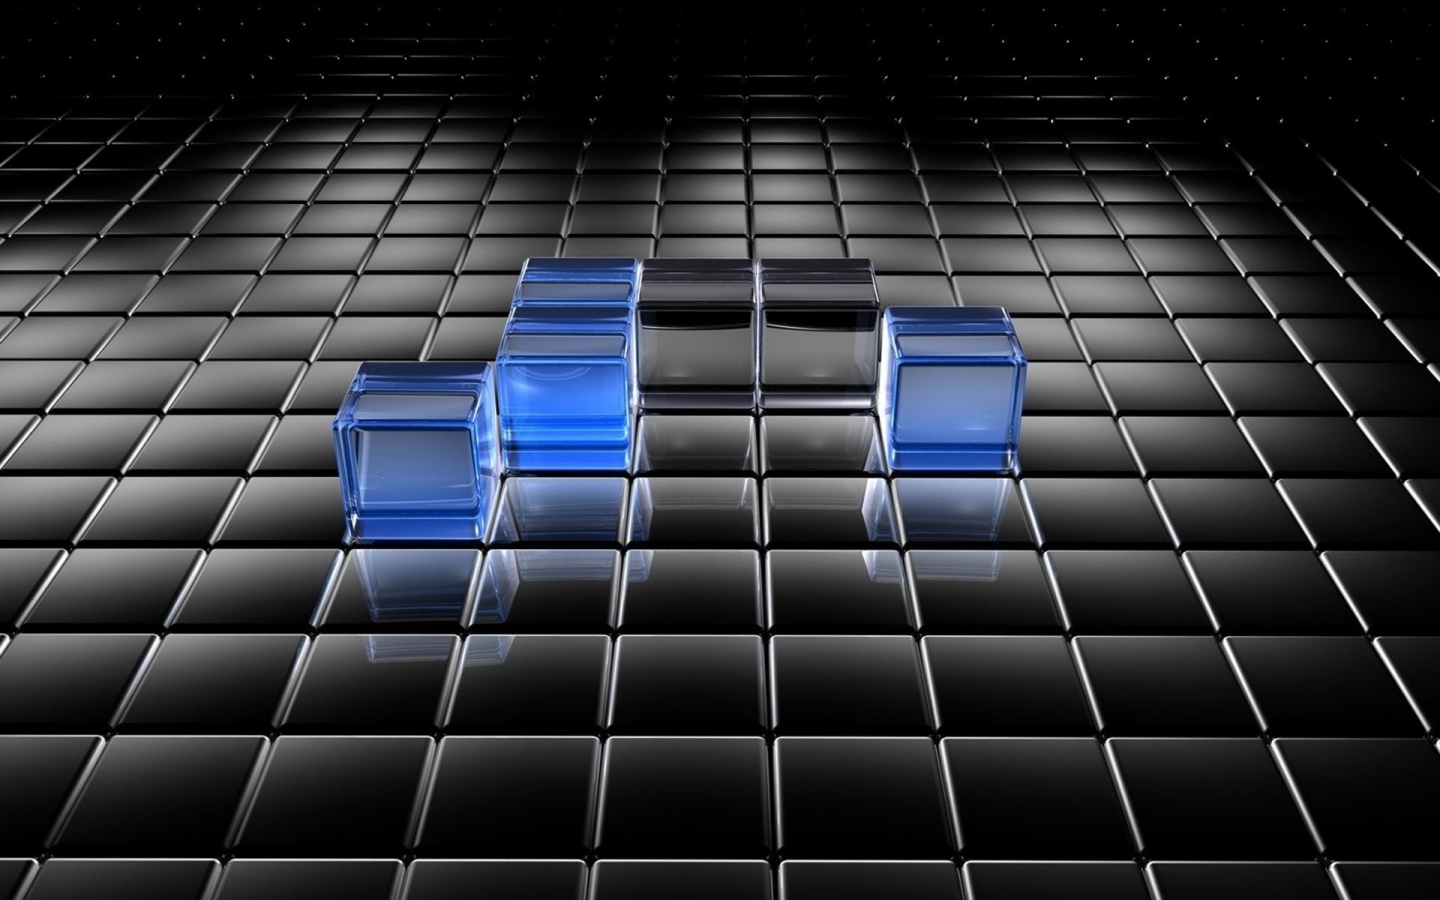 Black and Blue Translucent Cubes Mac Wallpaper Download Free Mac